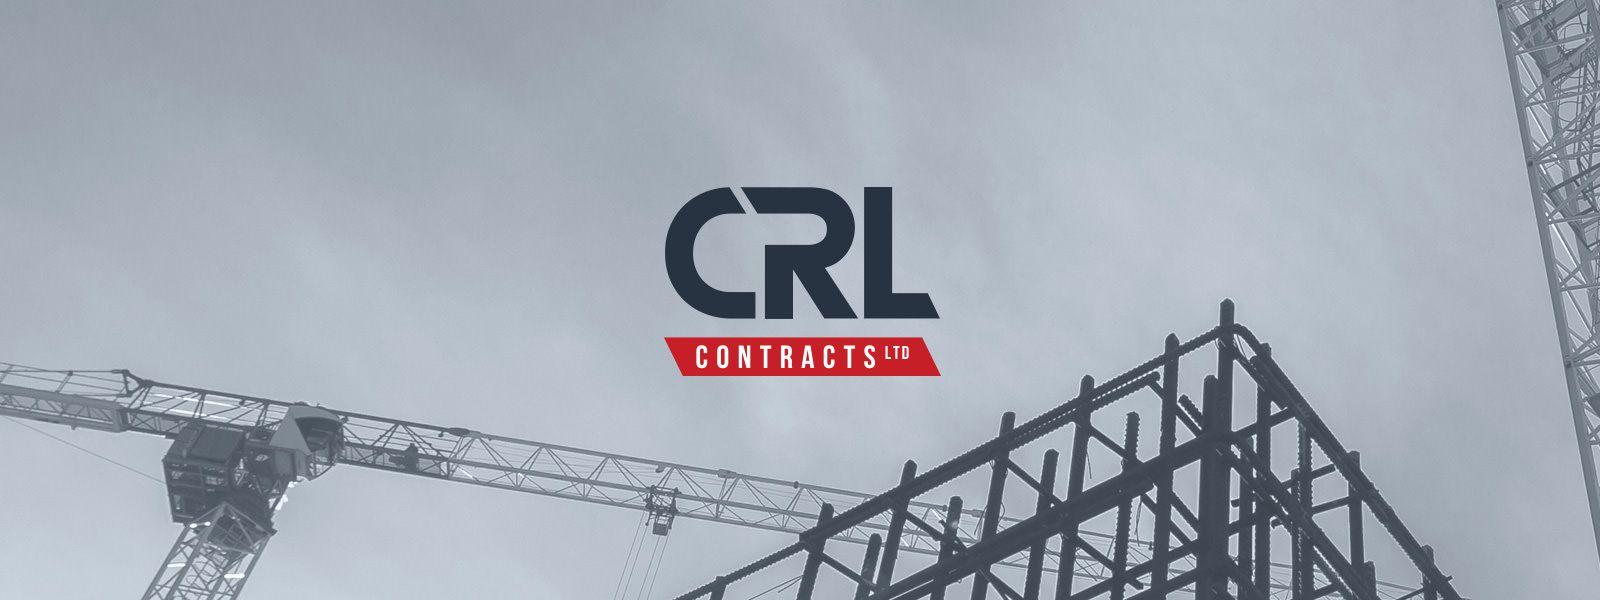 CRL Logo - Logo, Stationery & Website Design Contracts Ltd